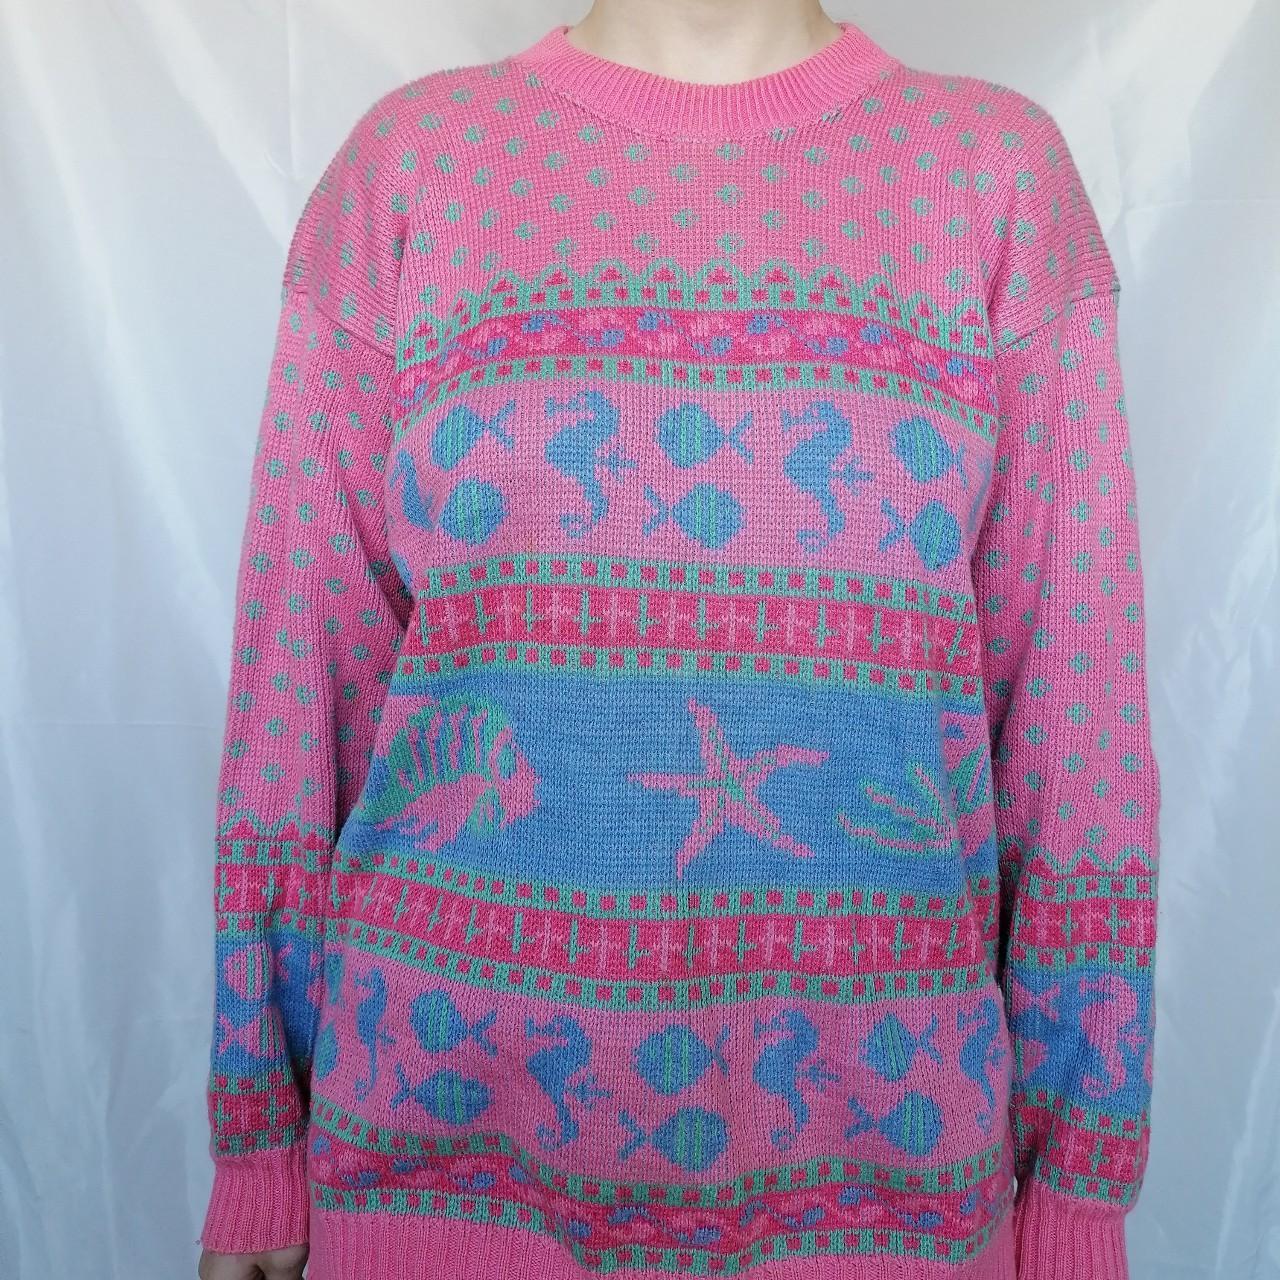 Vintage fairykei sea animals sweater, pink with blue... - Depop